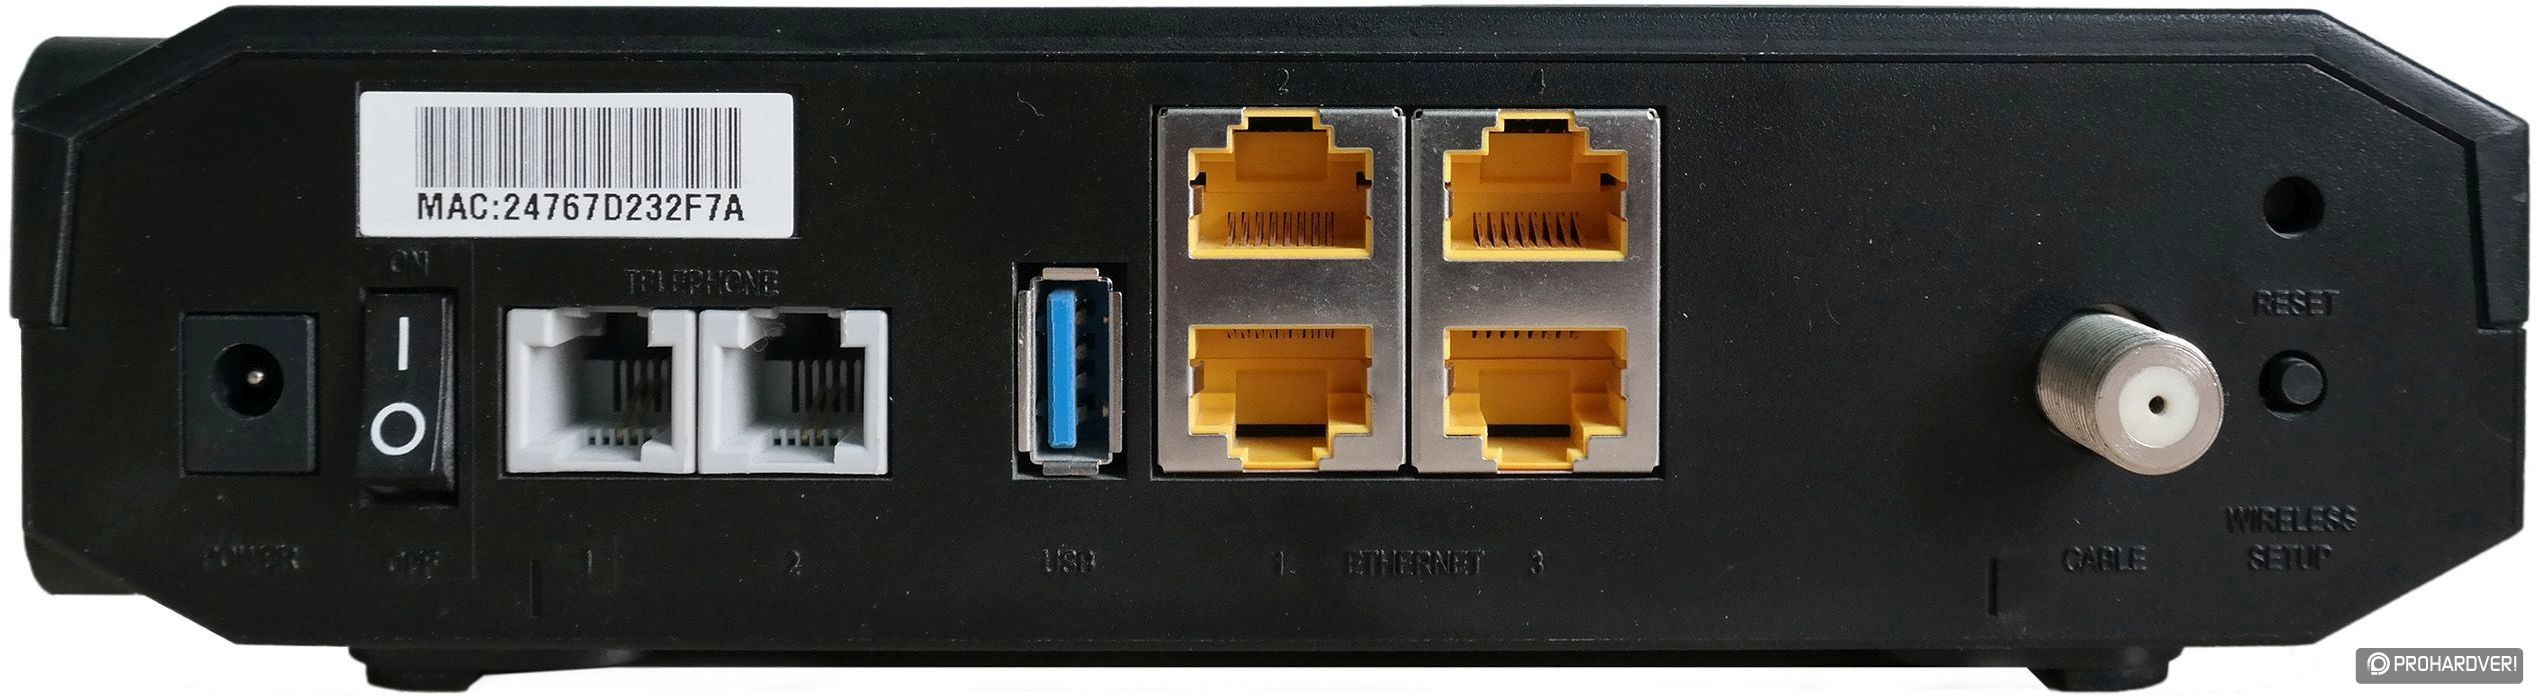 port forwarding connect box upc